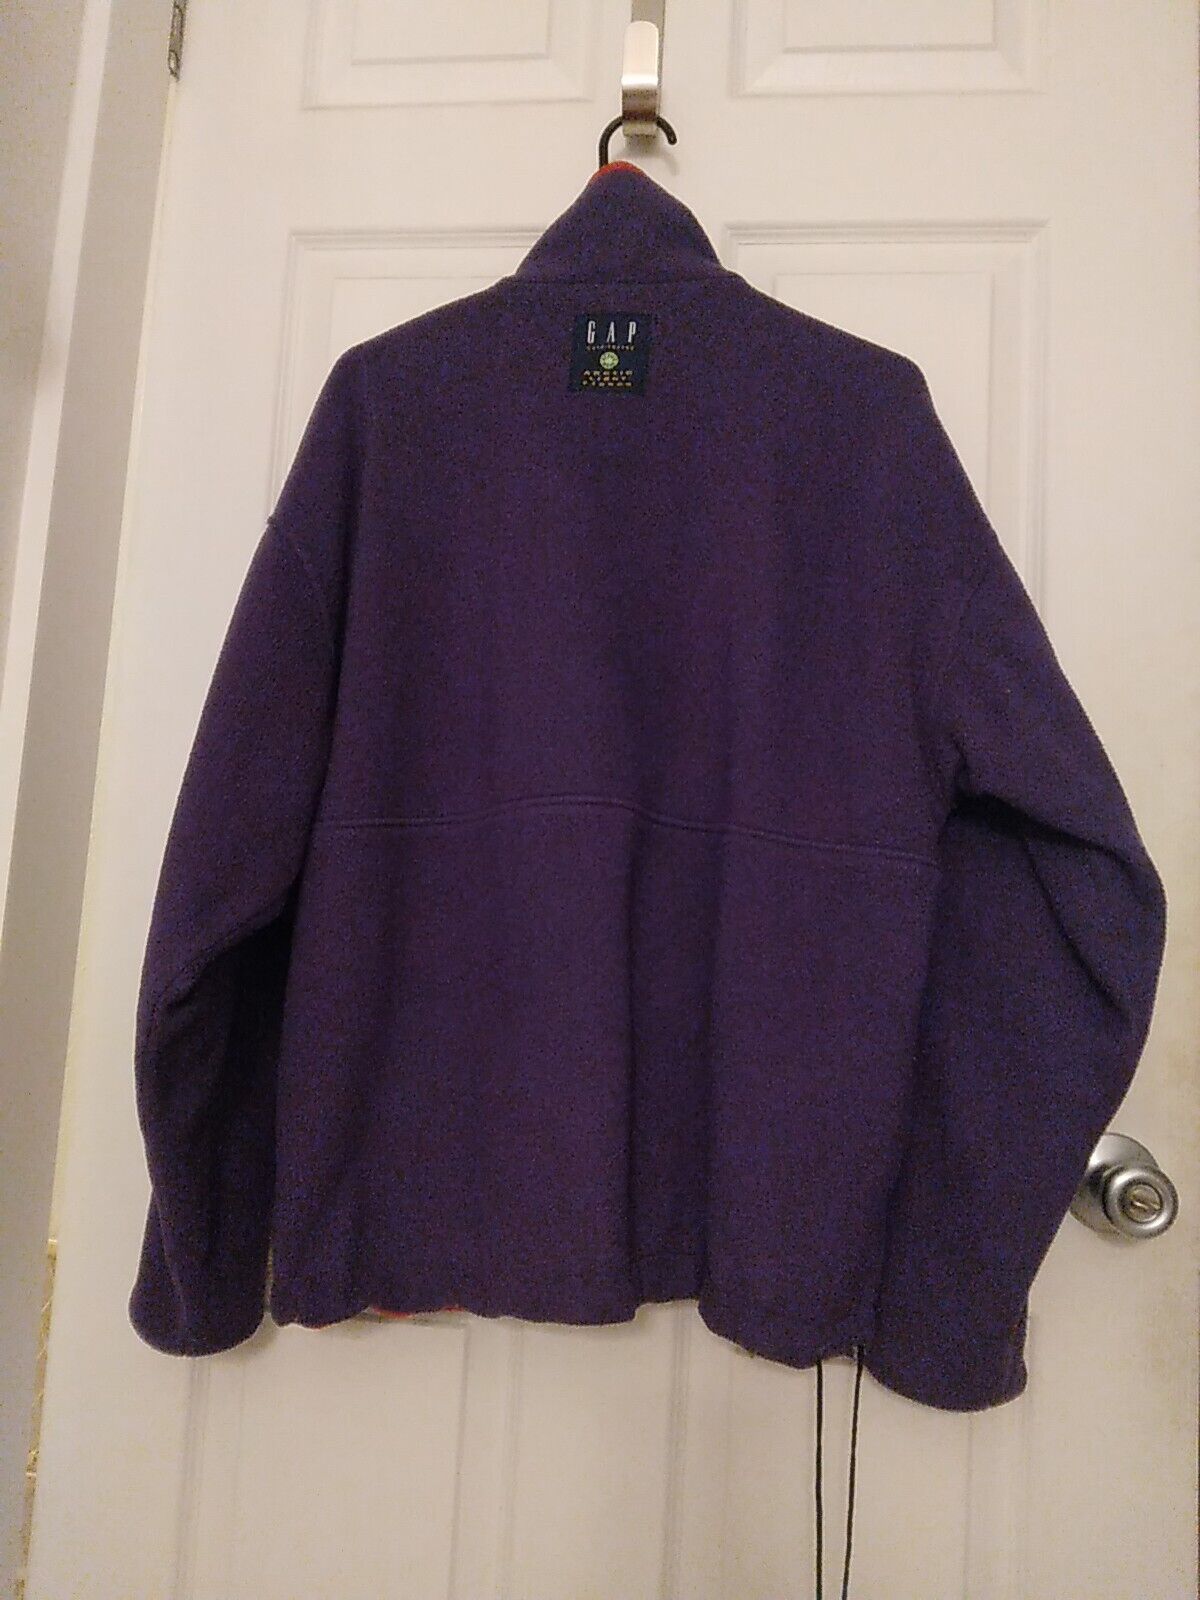 Gap Vintage Reversible Fleece Jacket Mens Large A… - image 4